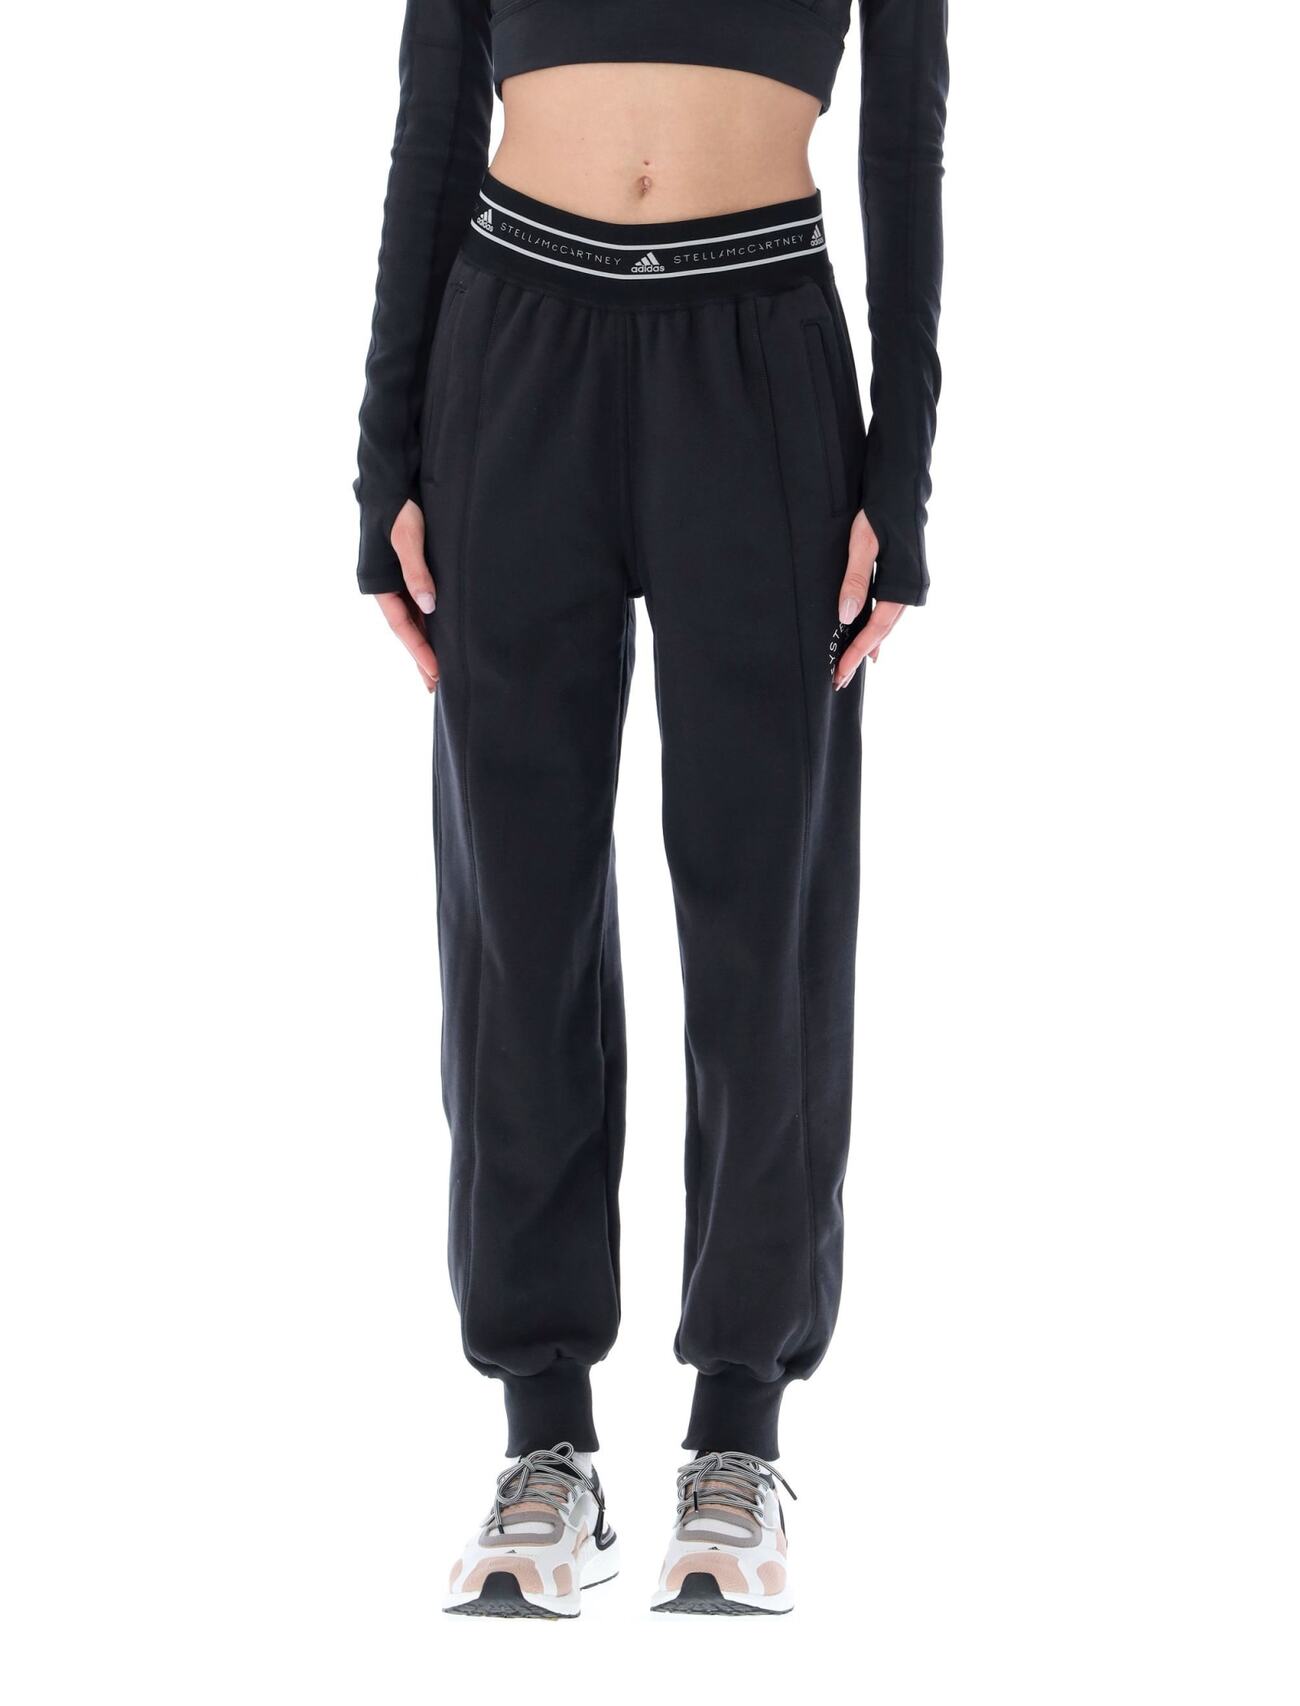 Adidas by Stella McCartney Logo Sweat Pants in black